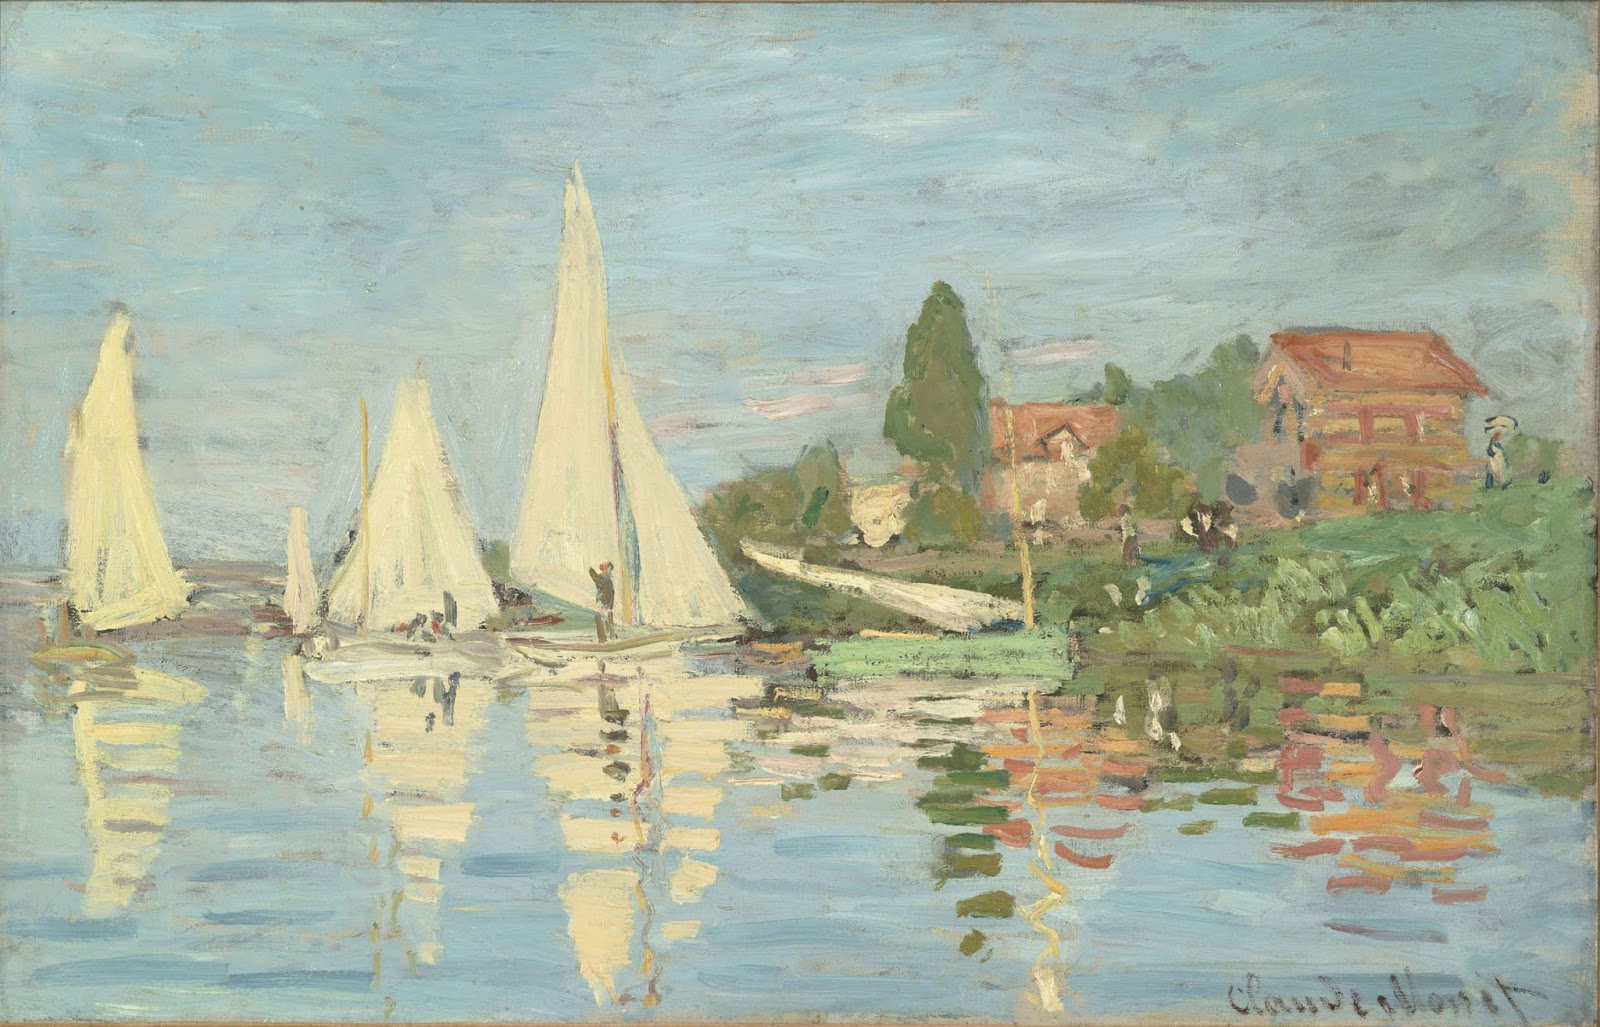 Claude+Monet-1840-1926 (610).jpg